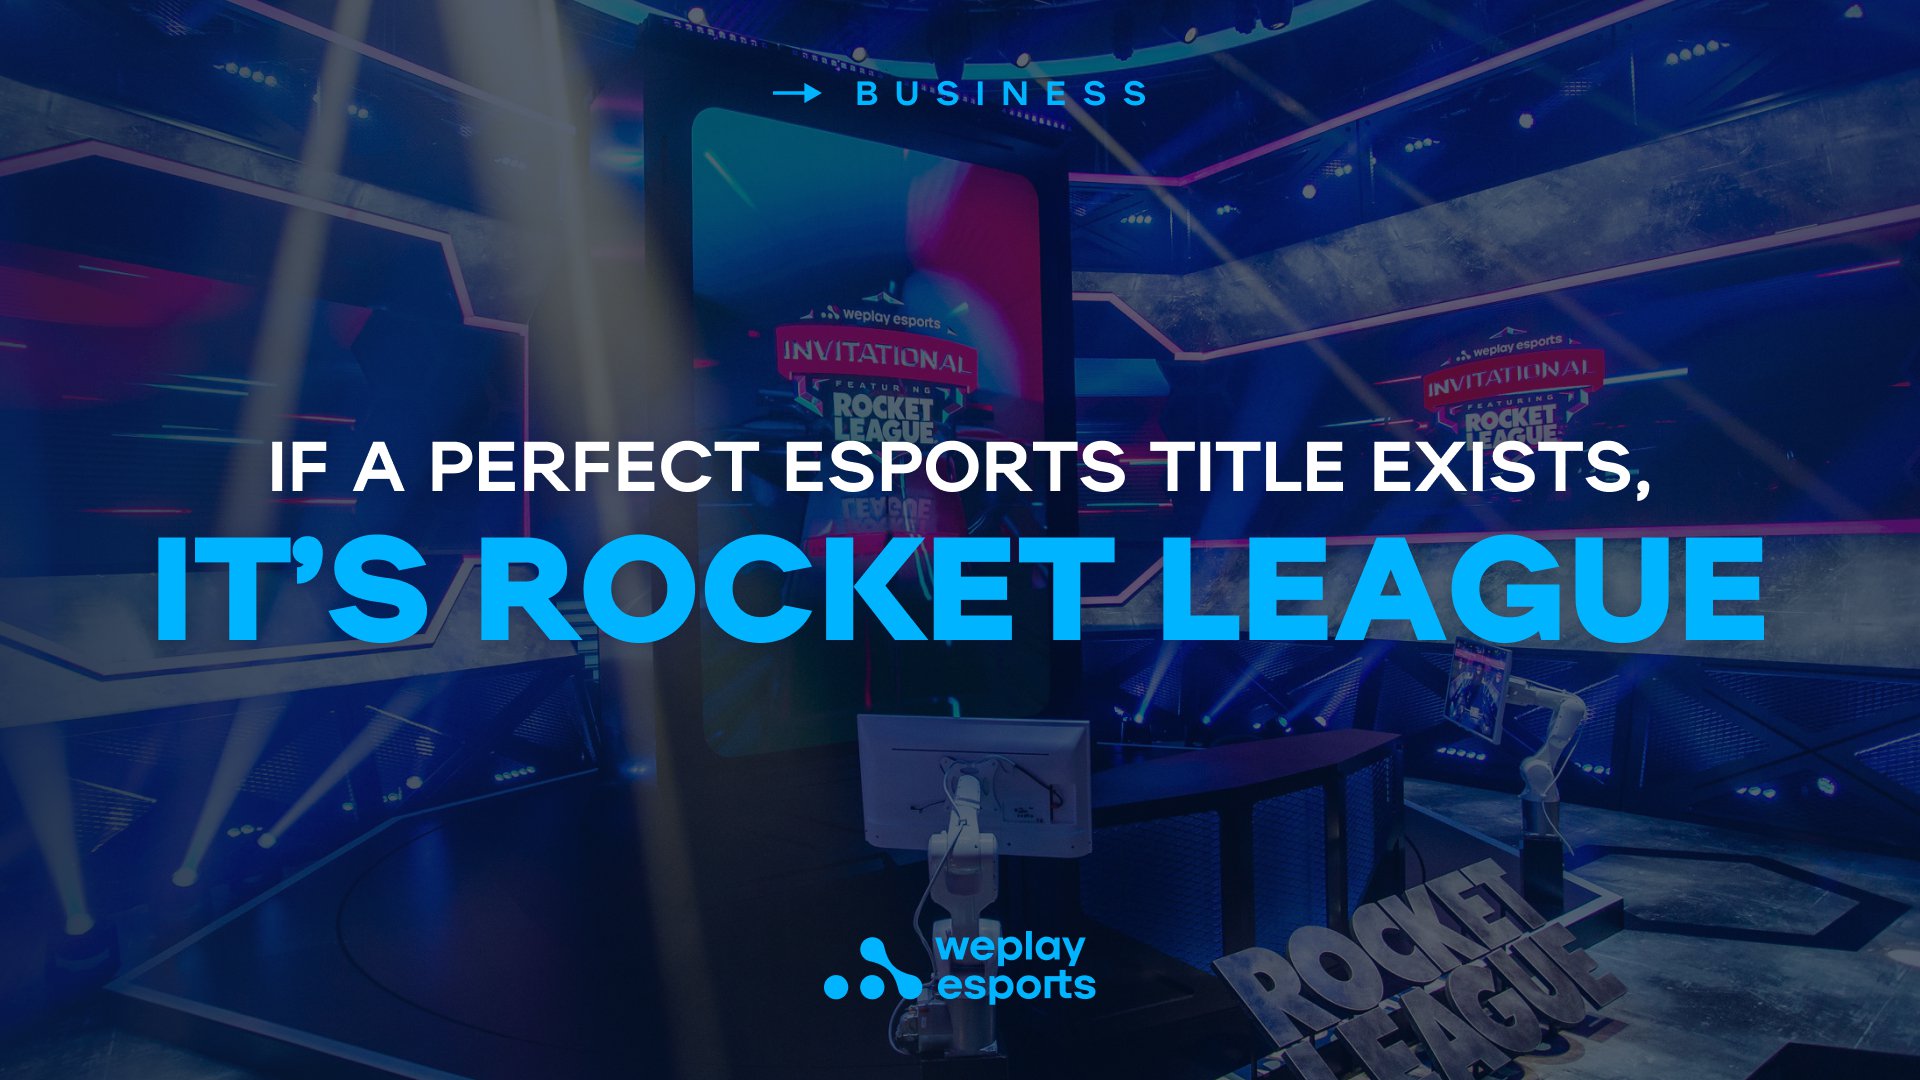 If a perfect esports title exists, it’s Rocket League. Image: Rocket League